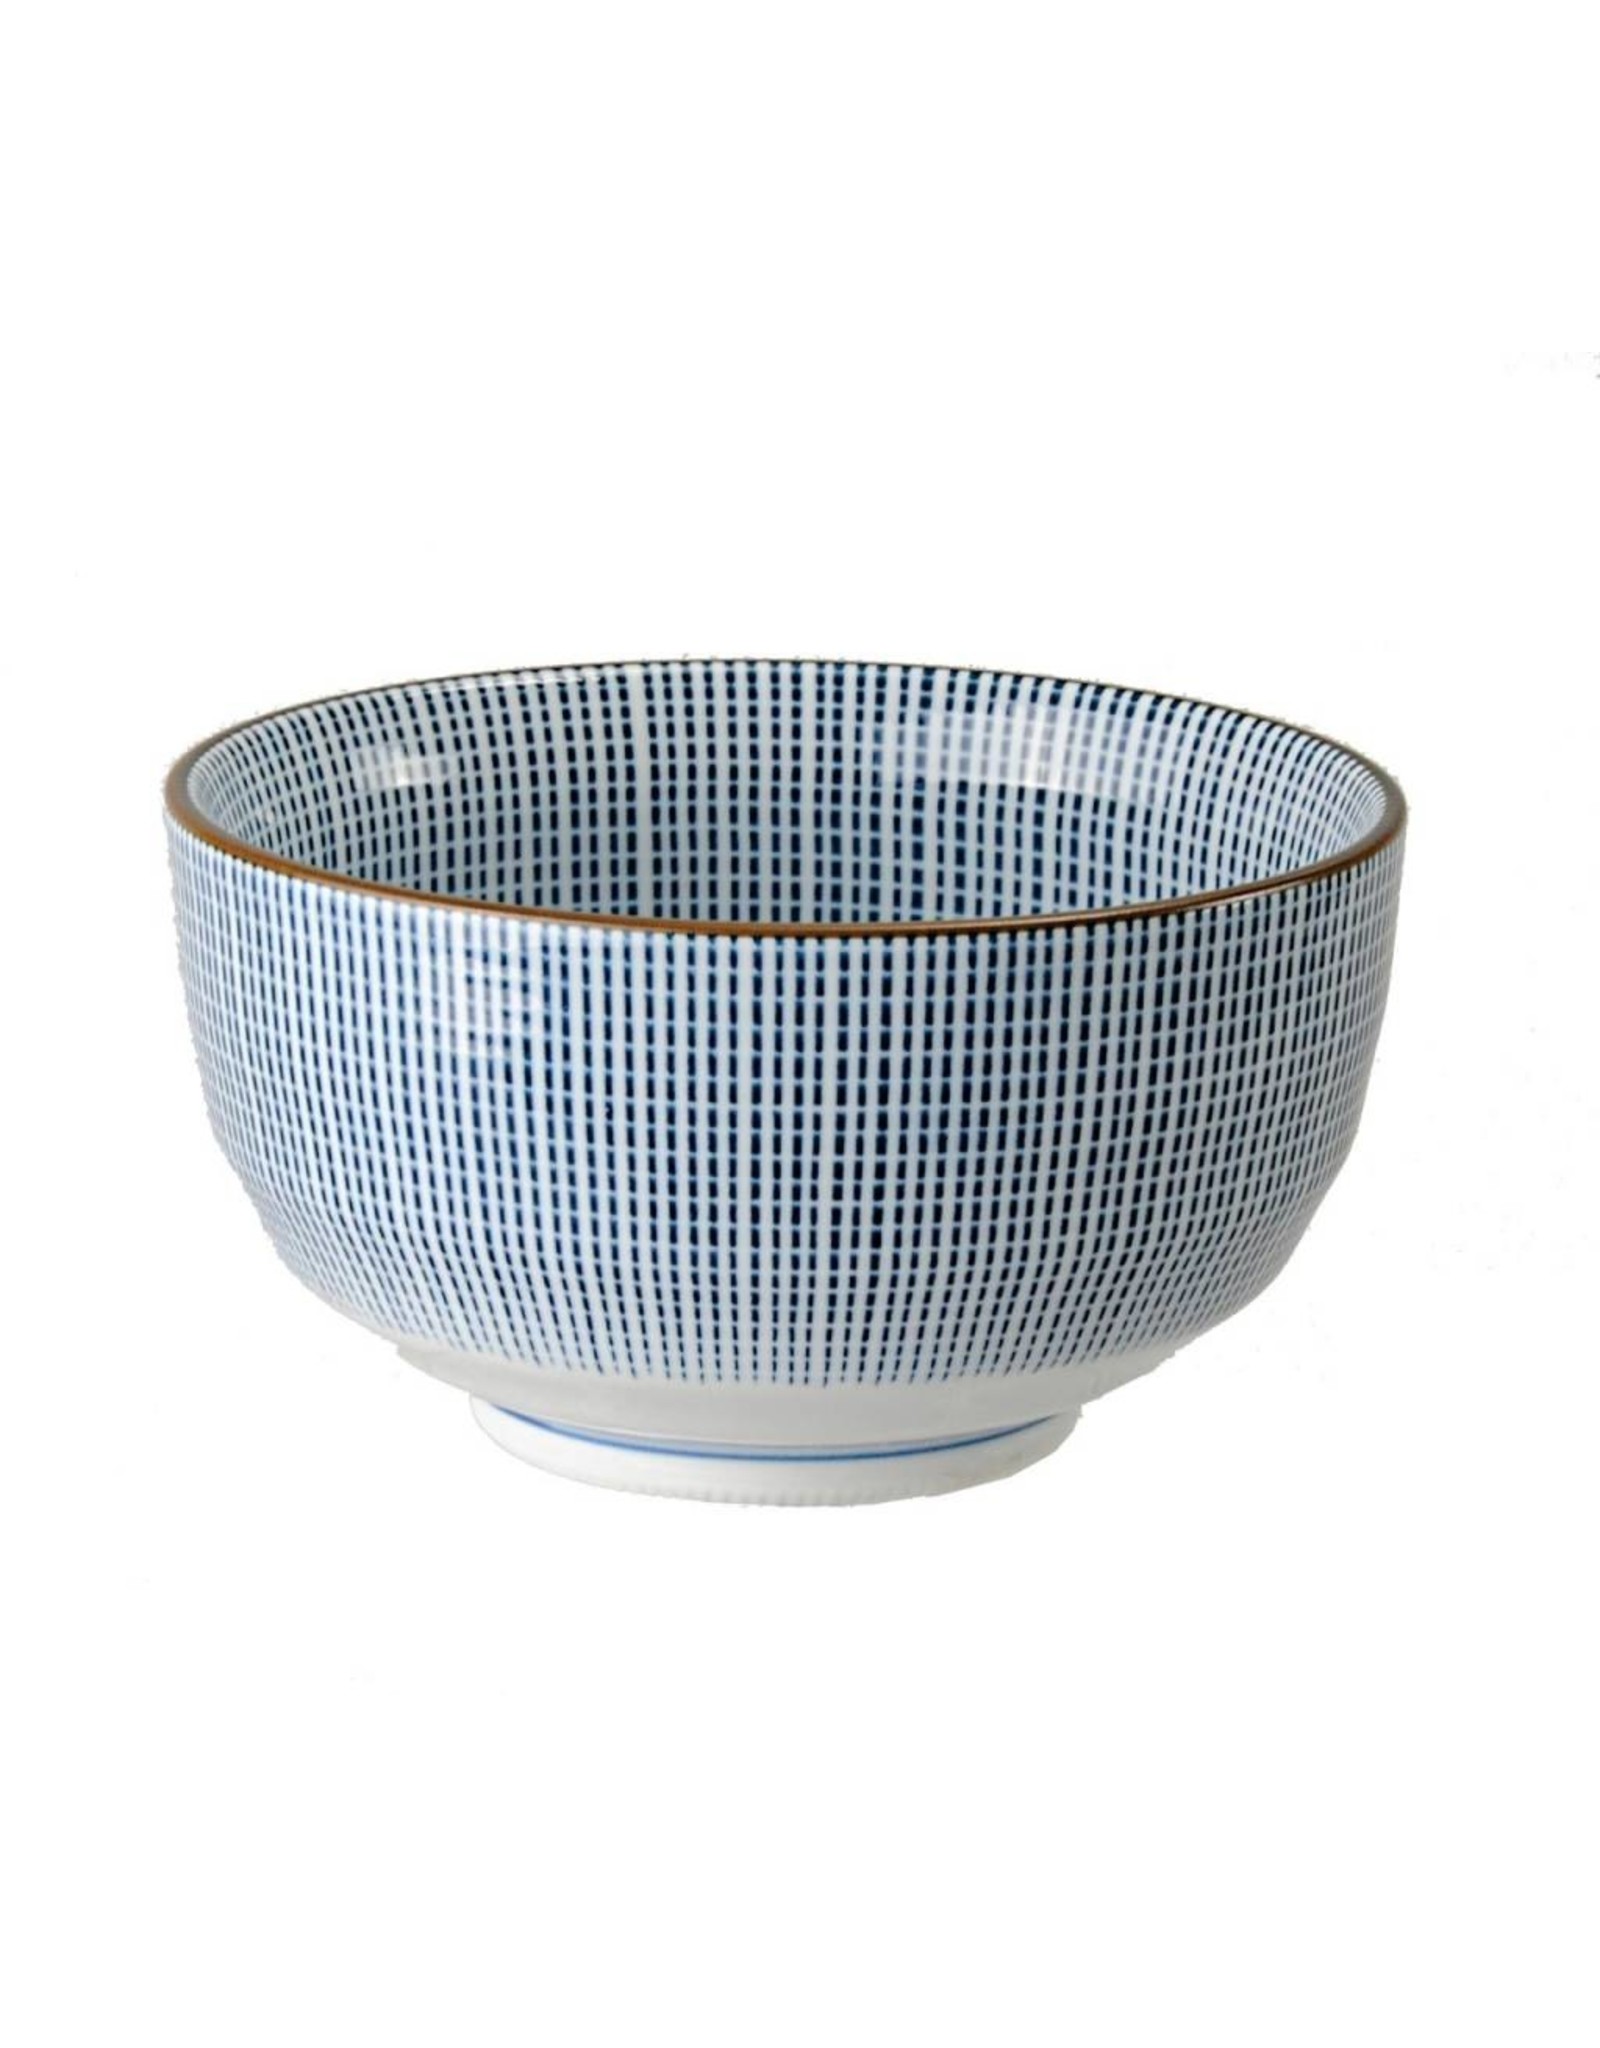 Tokyo Design Studio Sendan Blue Bowl 12.8x6.8cm 500ml